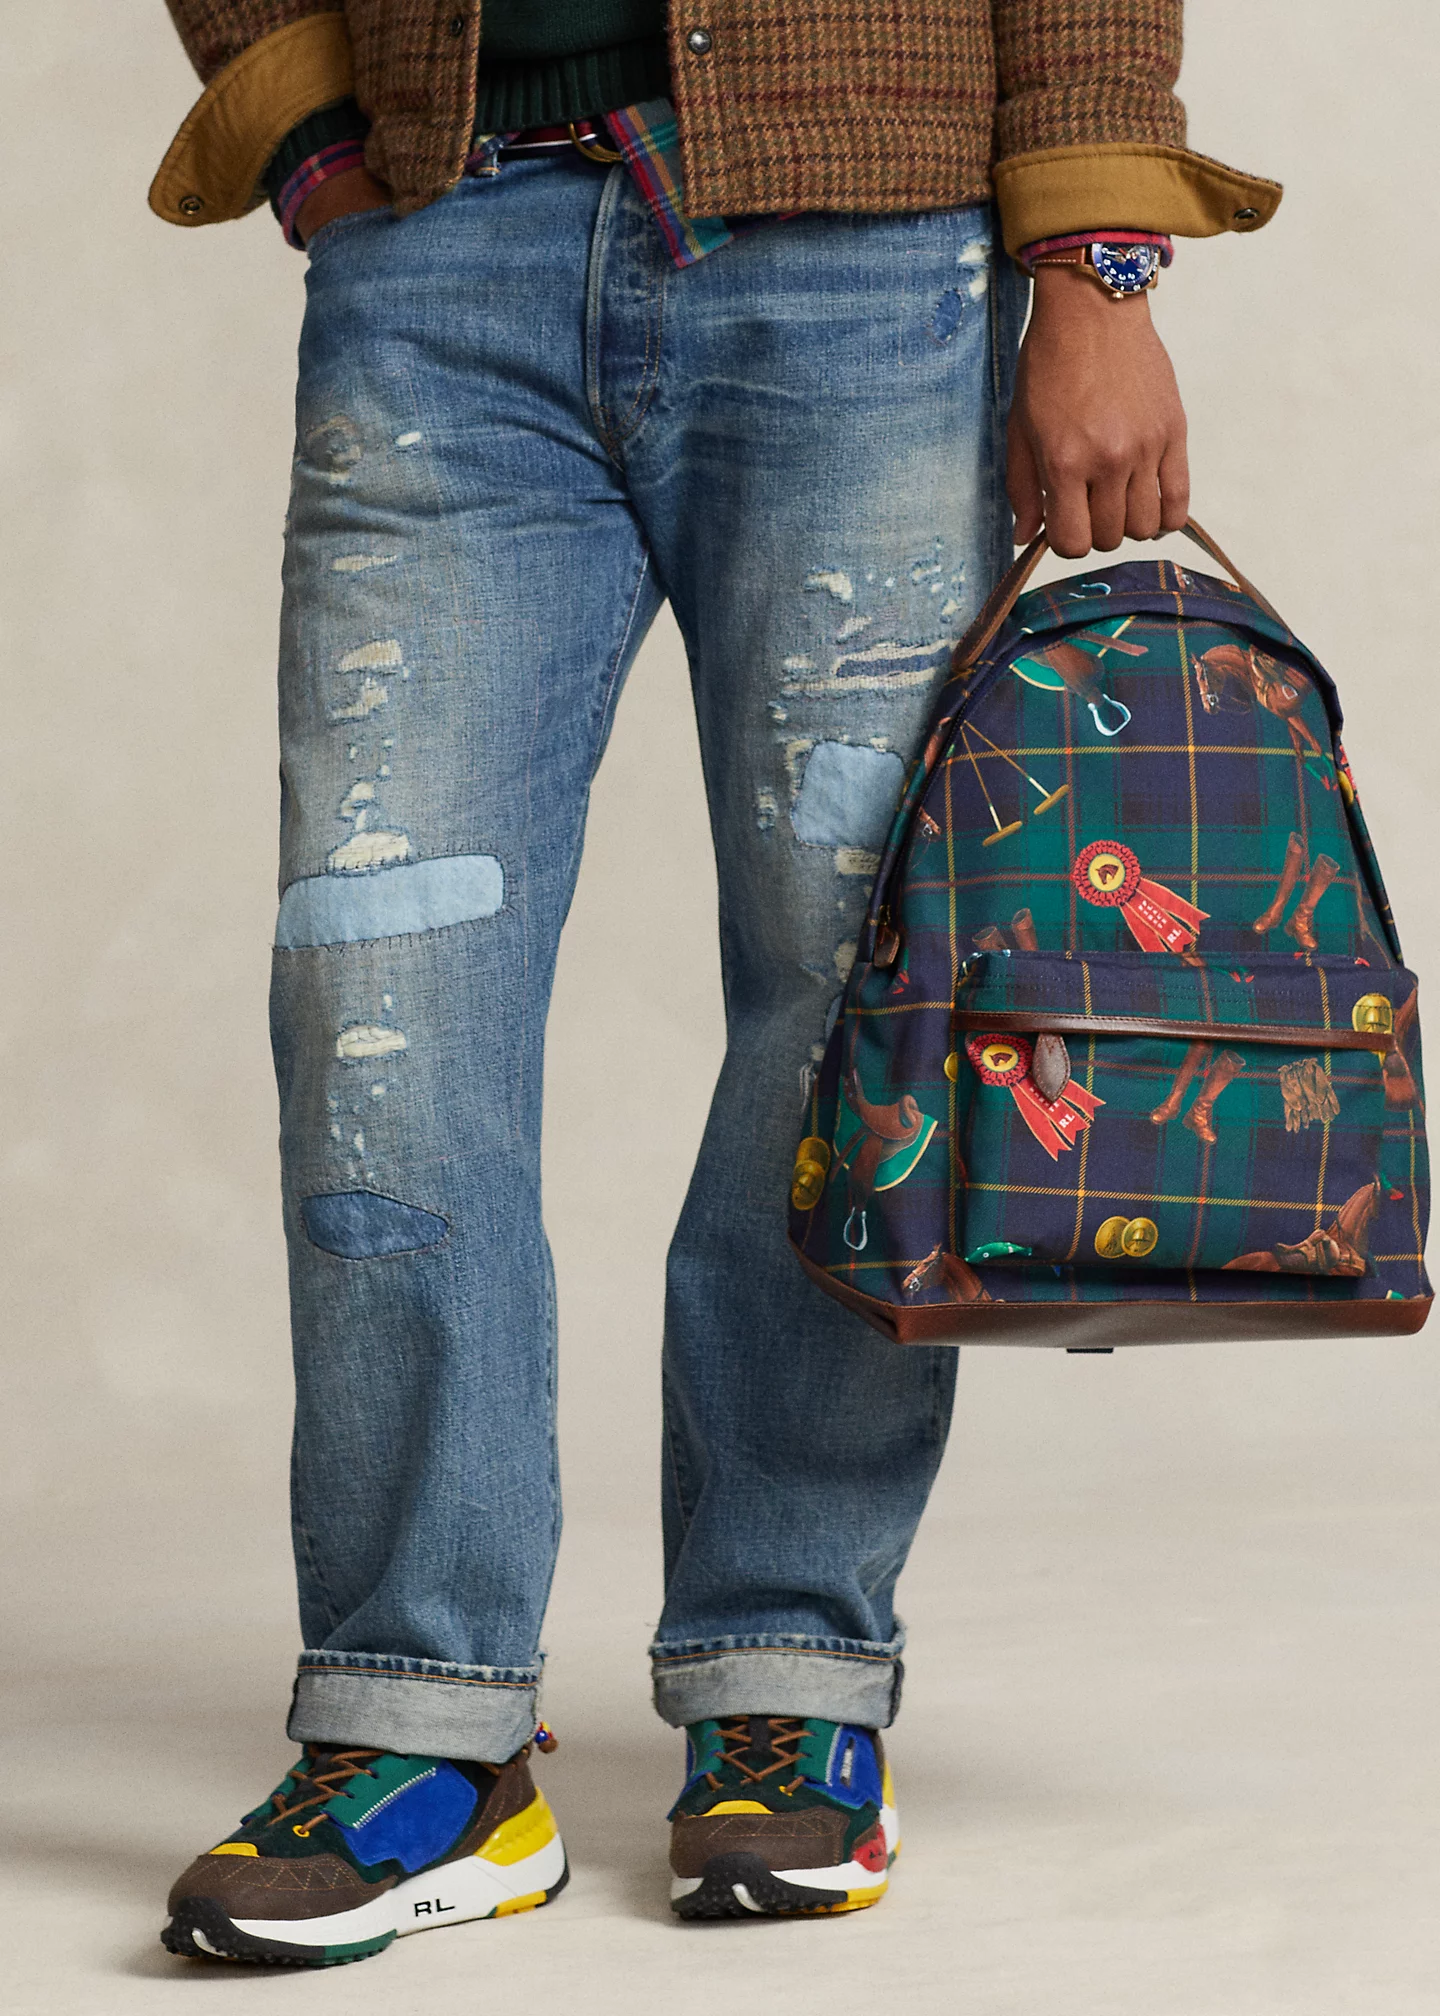 stylish handbagsEquestrian-Plaid Canvas Backpack-,$18.69-5